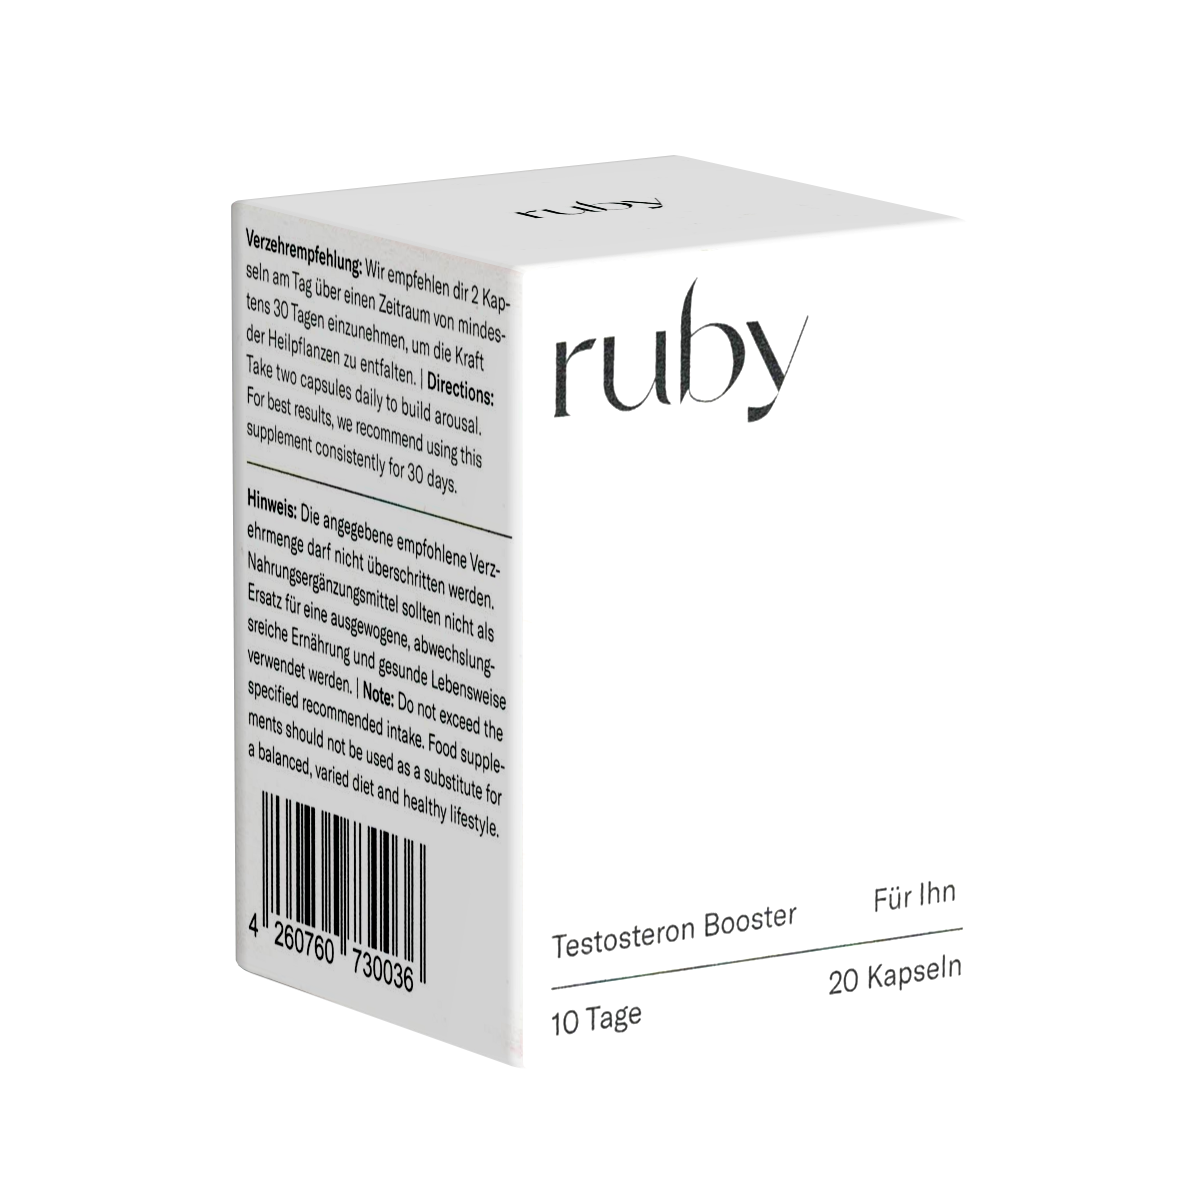 Ruby «Testosteron Booster» libidofördernde Kapseln für Männer 20 Stück